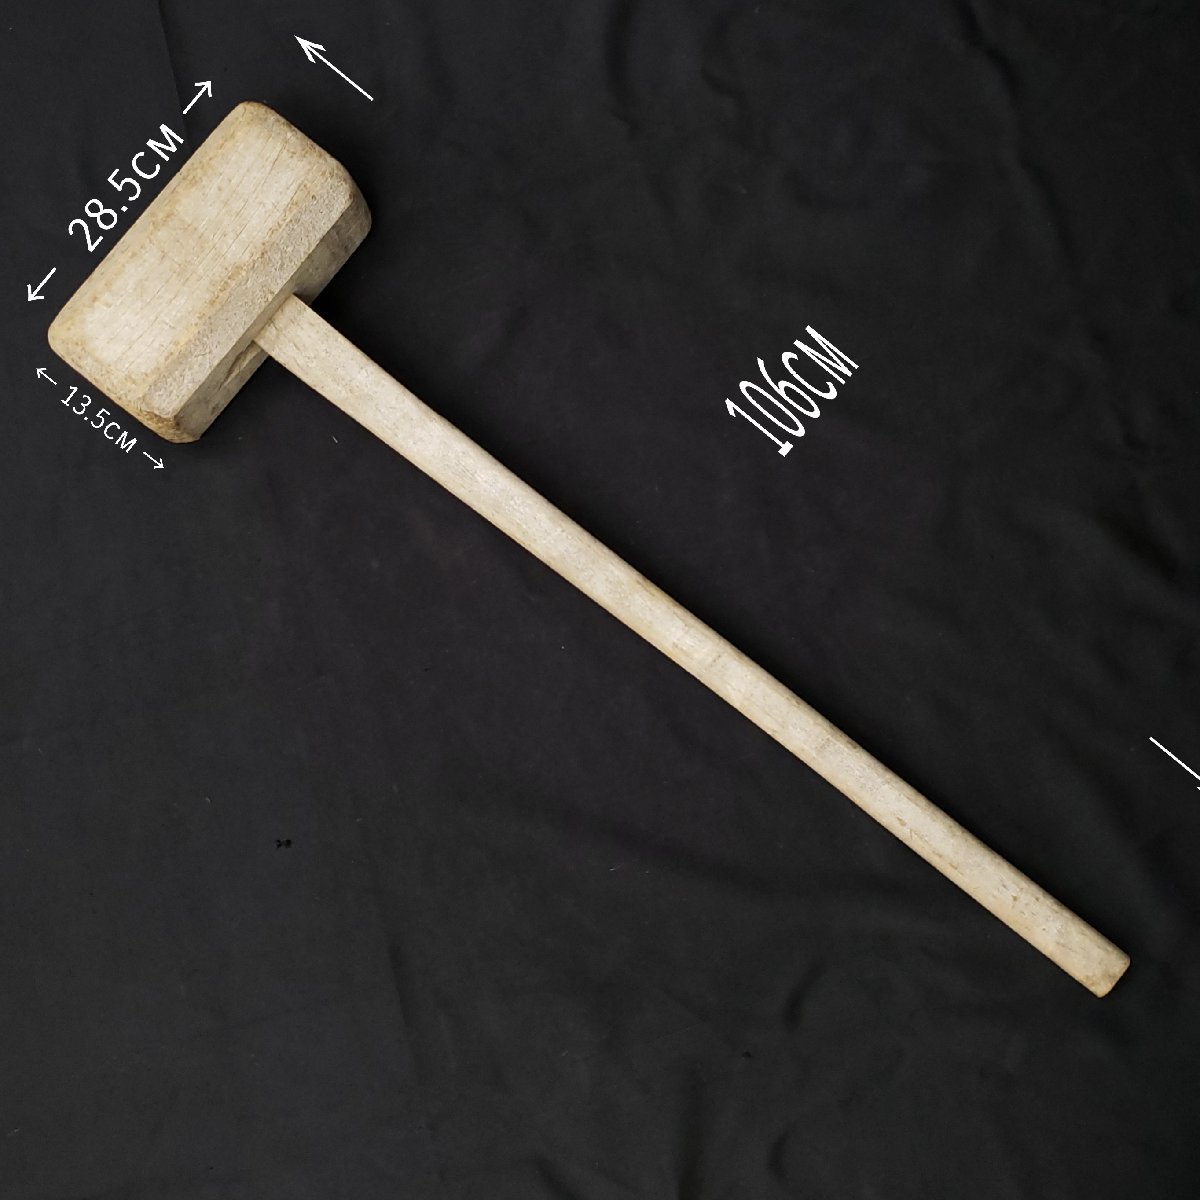  star anise . arrow length 106cm weight 4.5kg...kakeya old tool old .. wooden Hammer large wooden hammer . strike . both . large Hammer carpenter's tool construction dismantlement [170t2921]